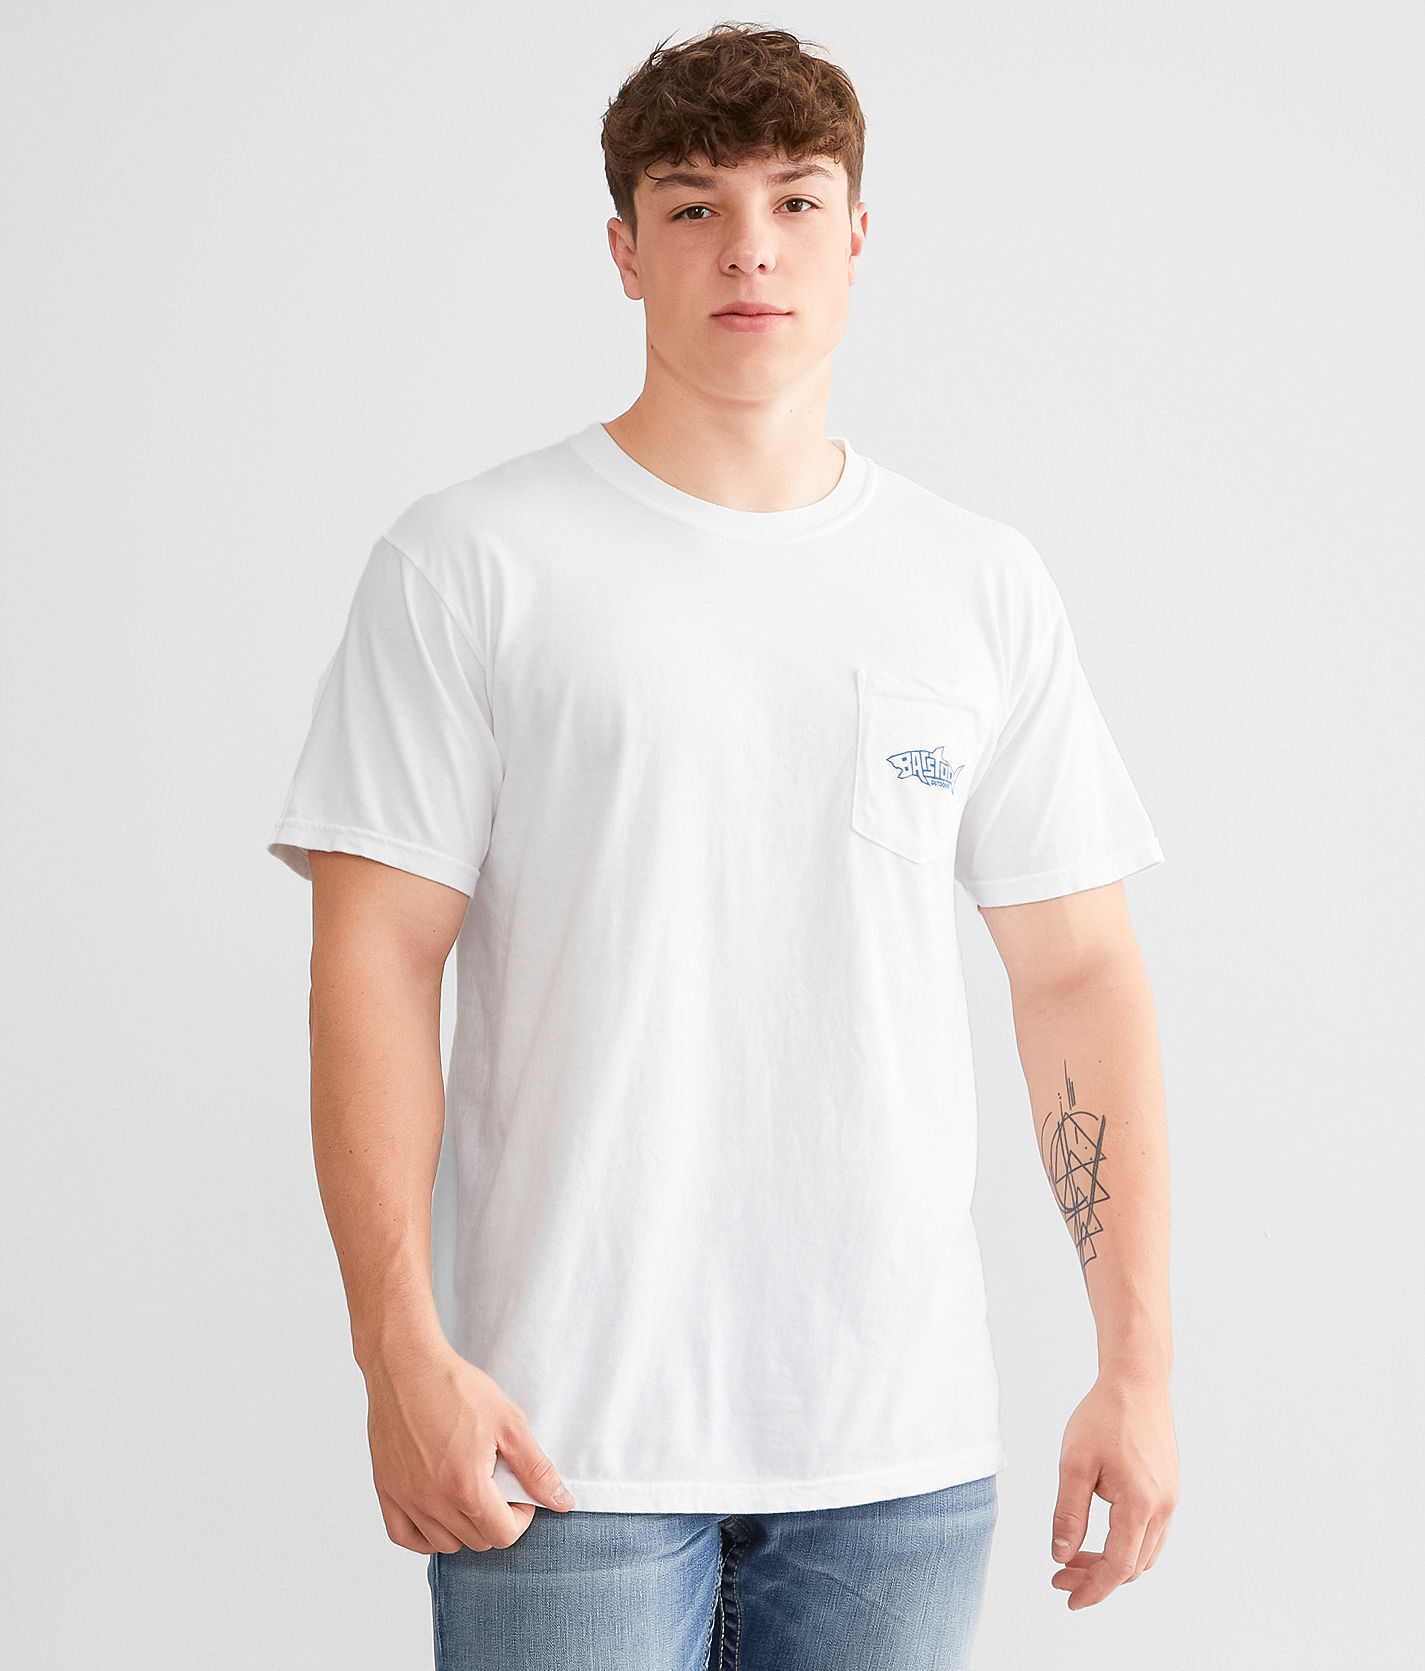 Barstool Sports Outdoors Shark T-Shirt  - White - male - Size: 2L